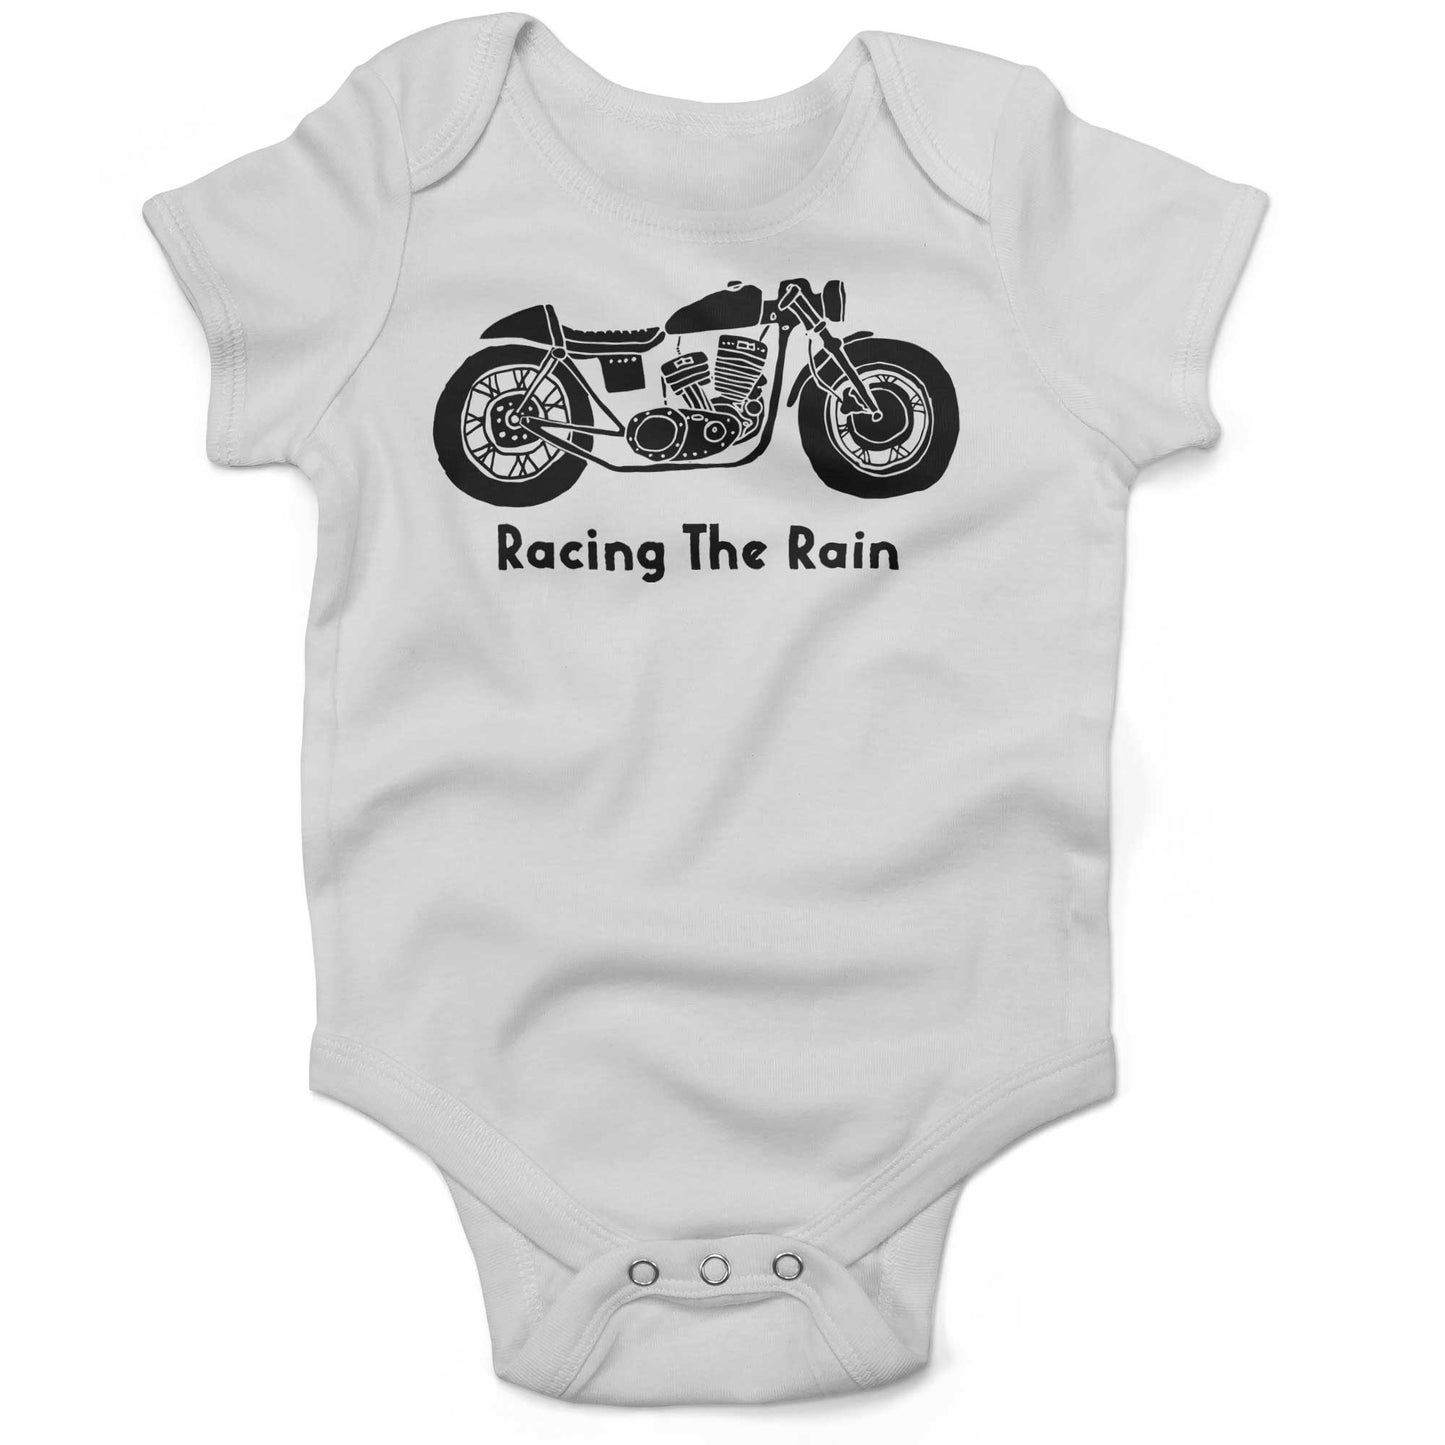 Racing The Rain Infant Bodysuit-White-3-6 months